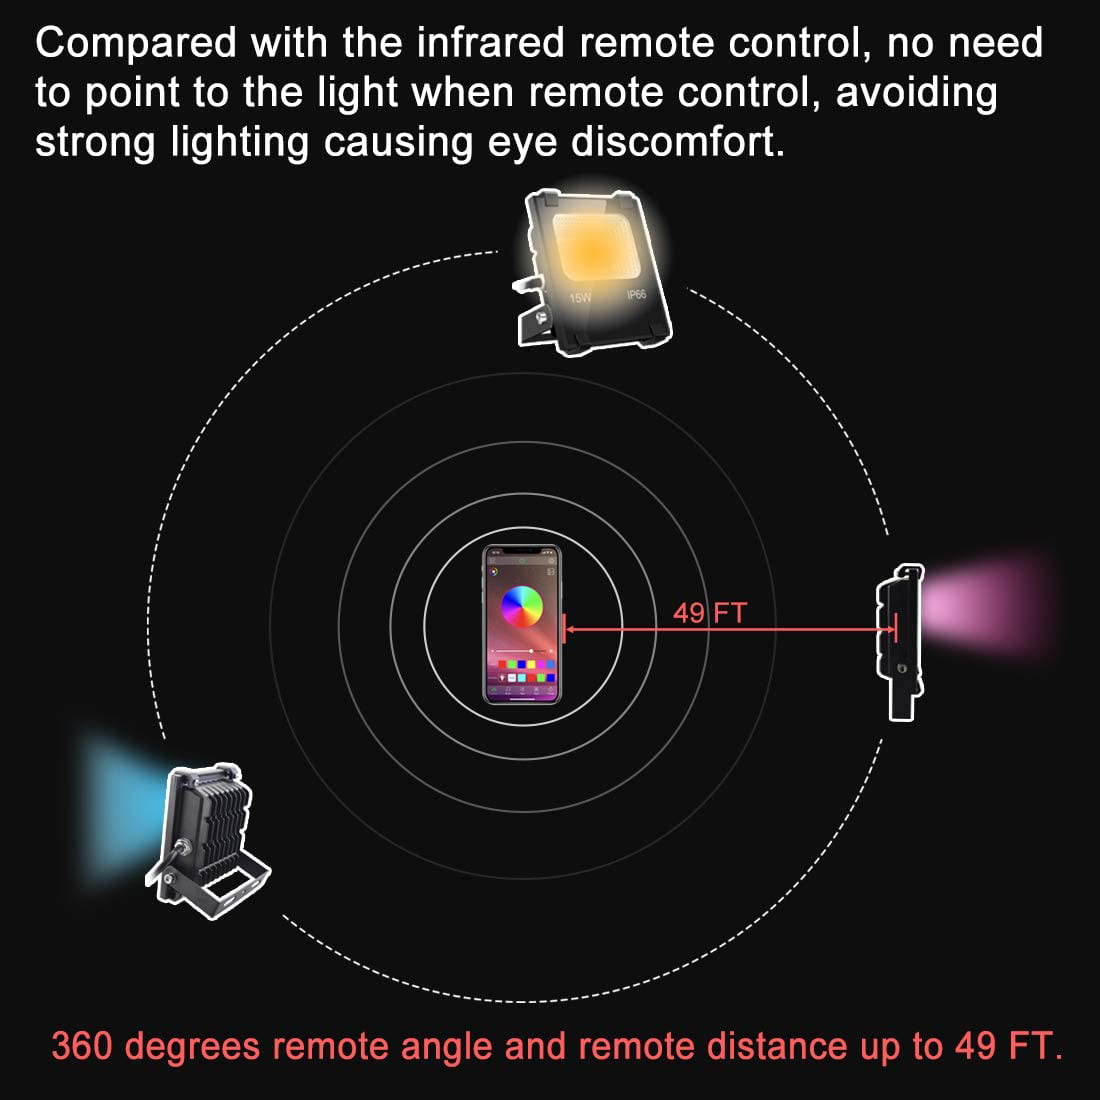 100W LED Flood Light RGB Light with Remote Control Synchronization Function US 